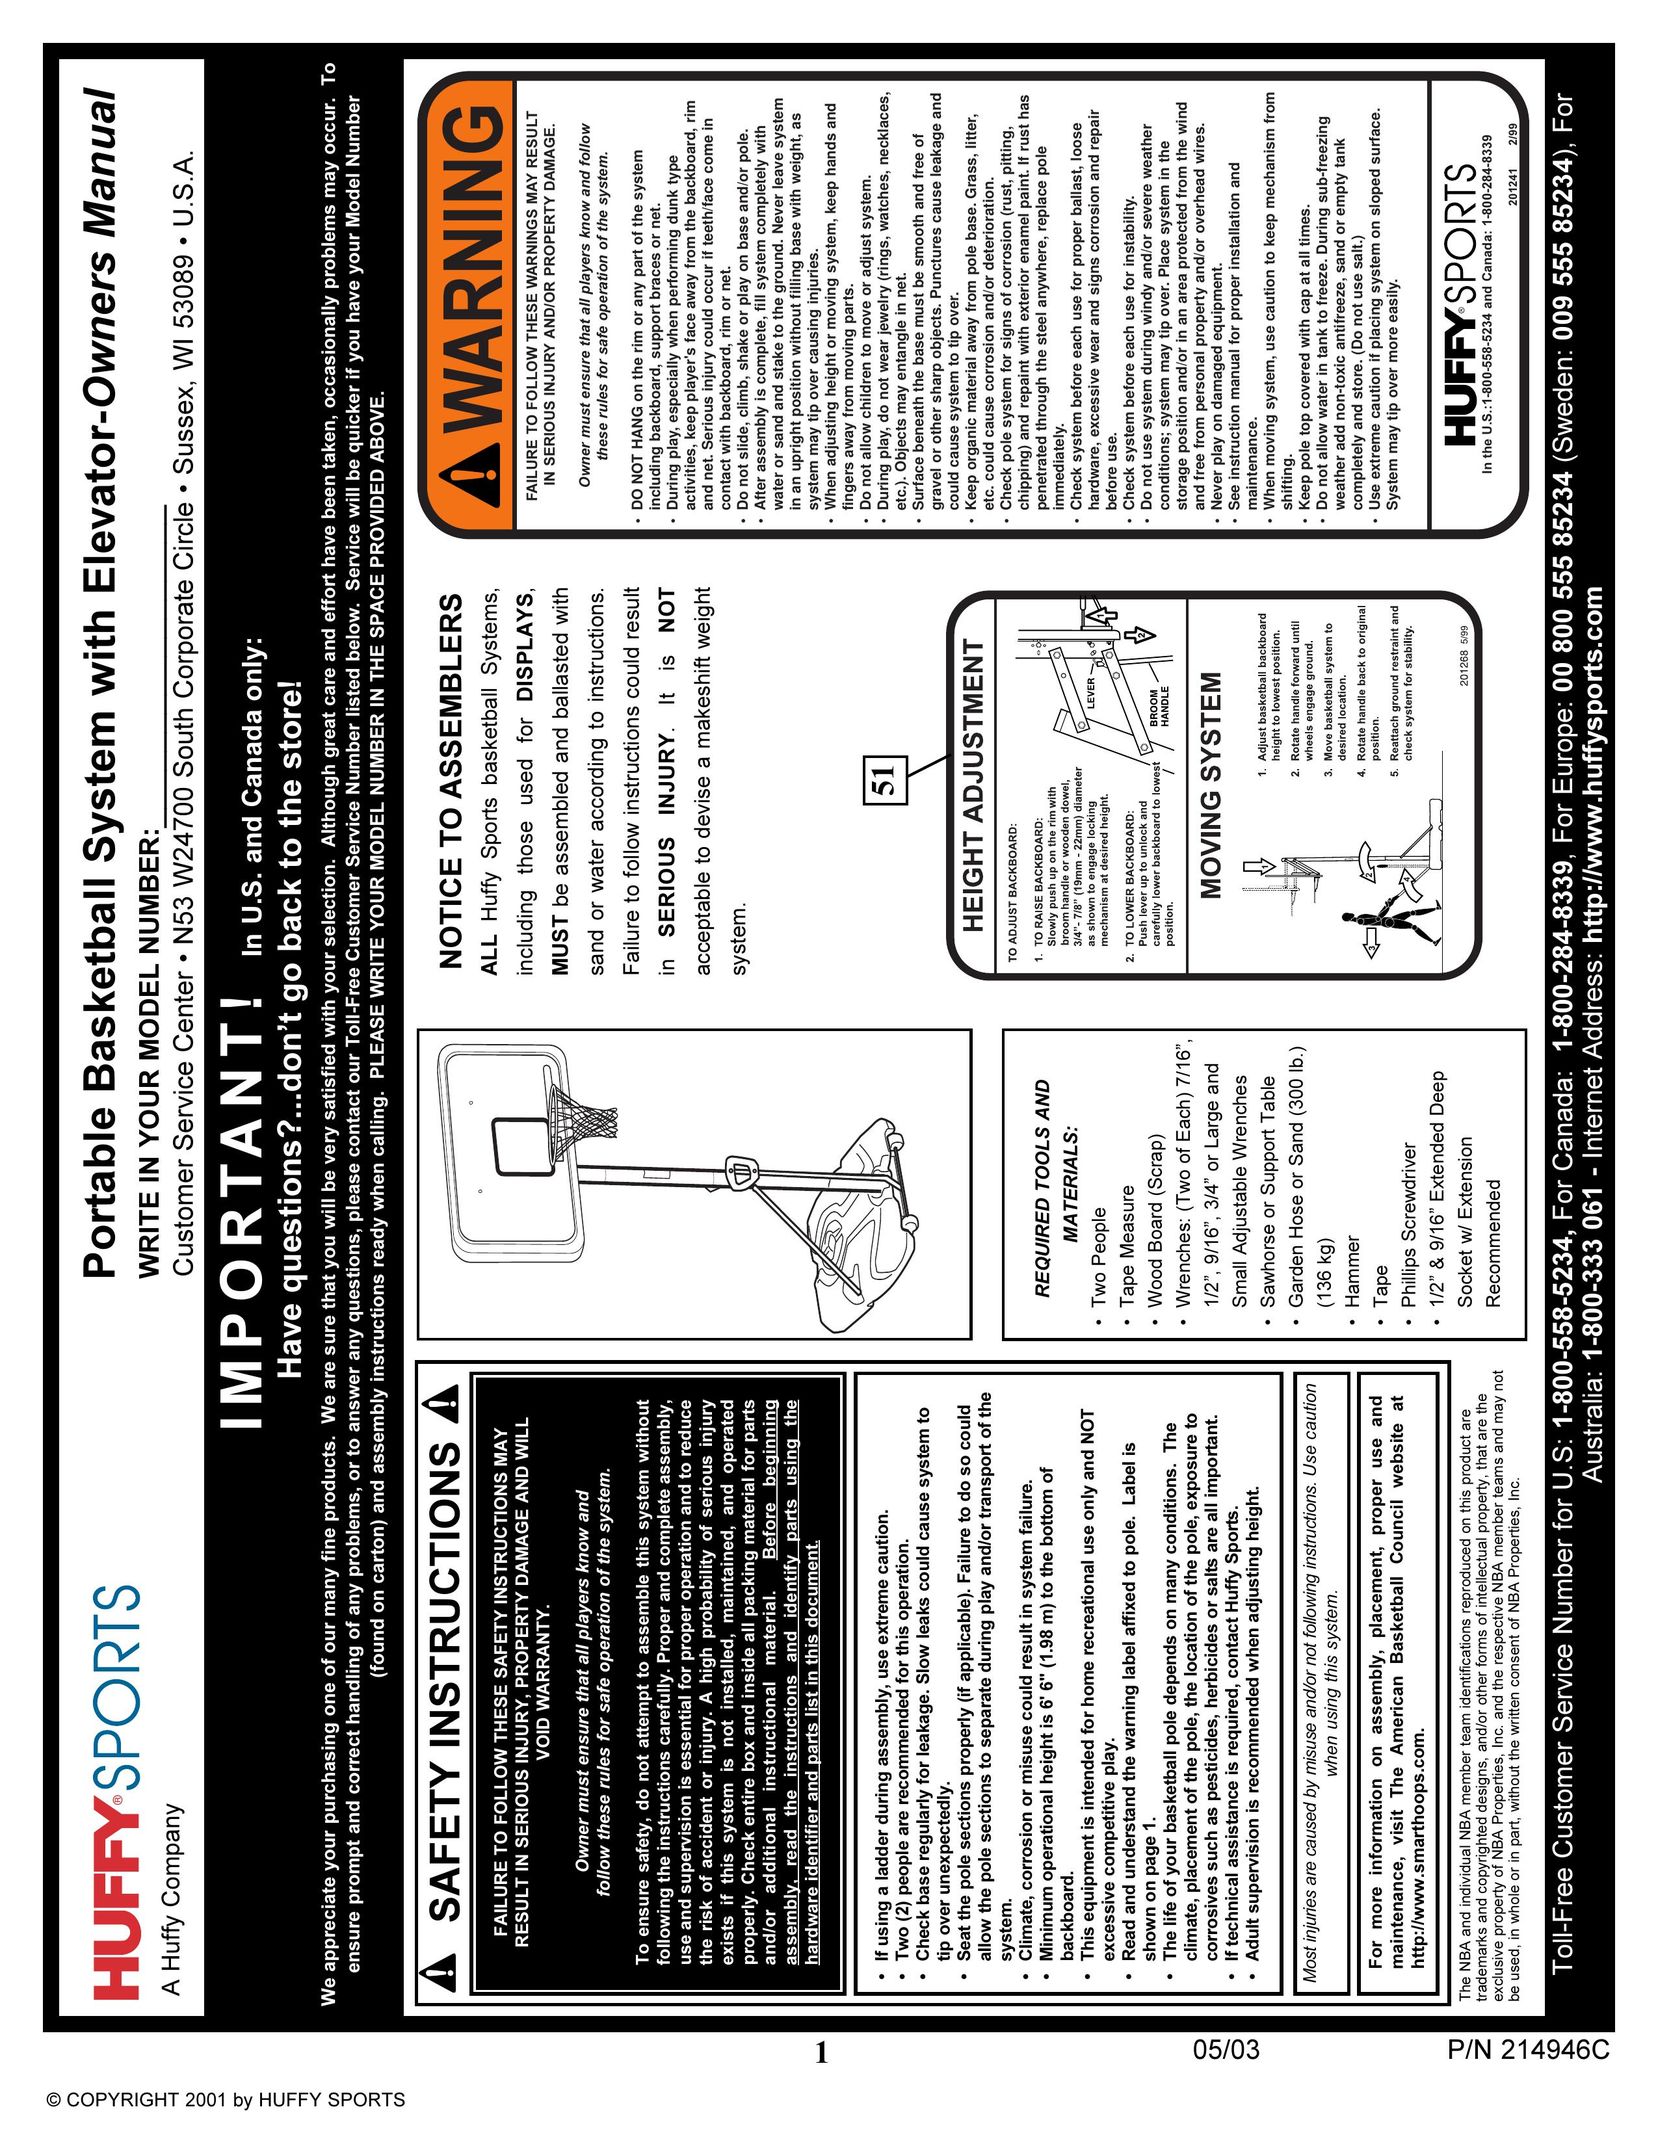 Huffy 214946C Fitness Equipment User Manual